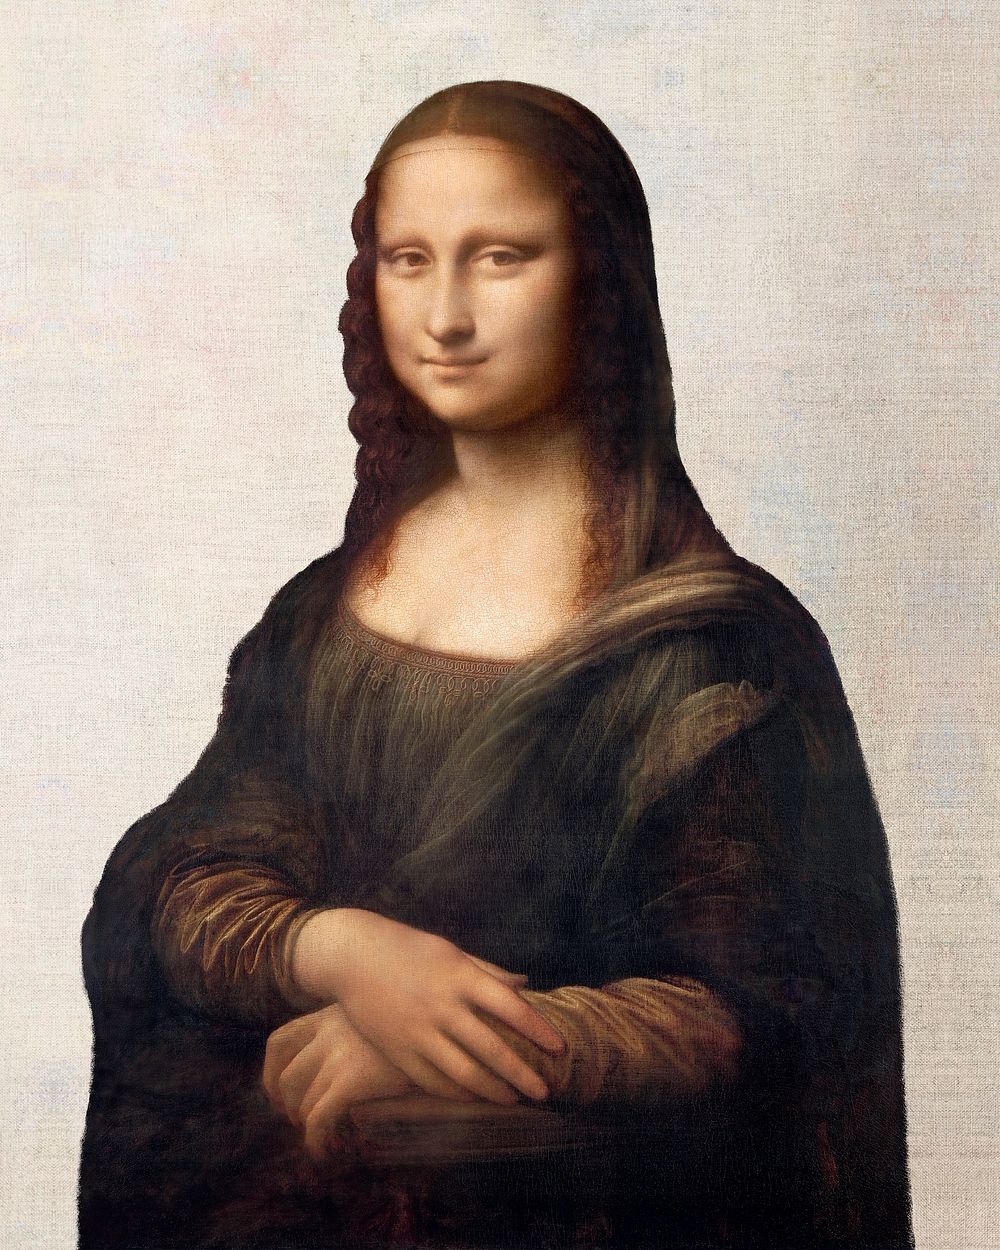 Mona Lisa illustration, Leonardo da Vinci's famous artwork, remastered by rawpixel